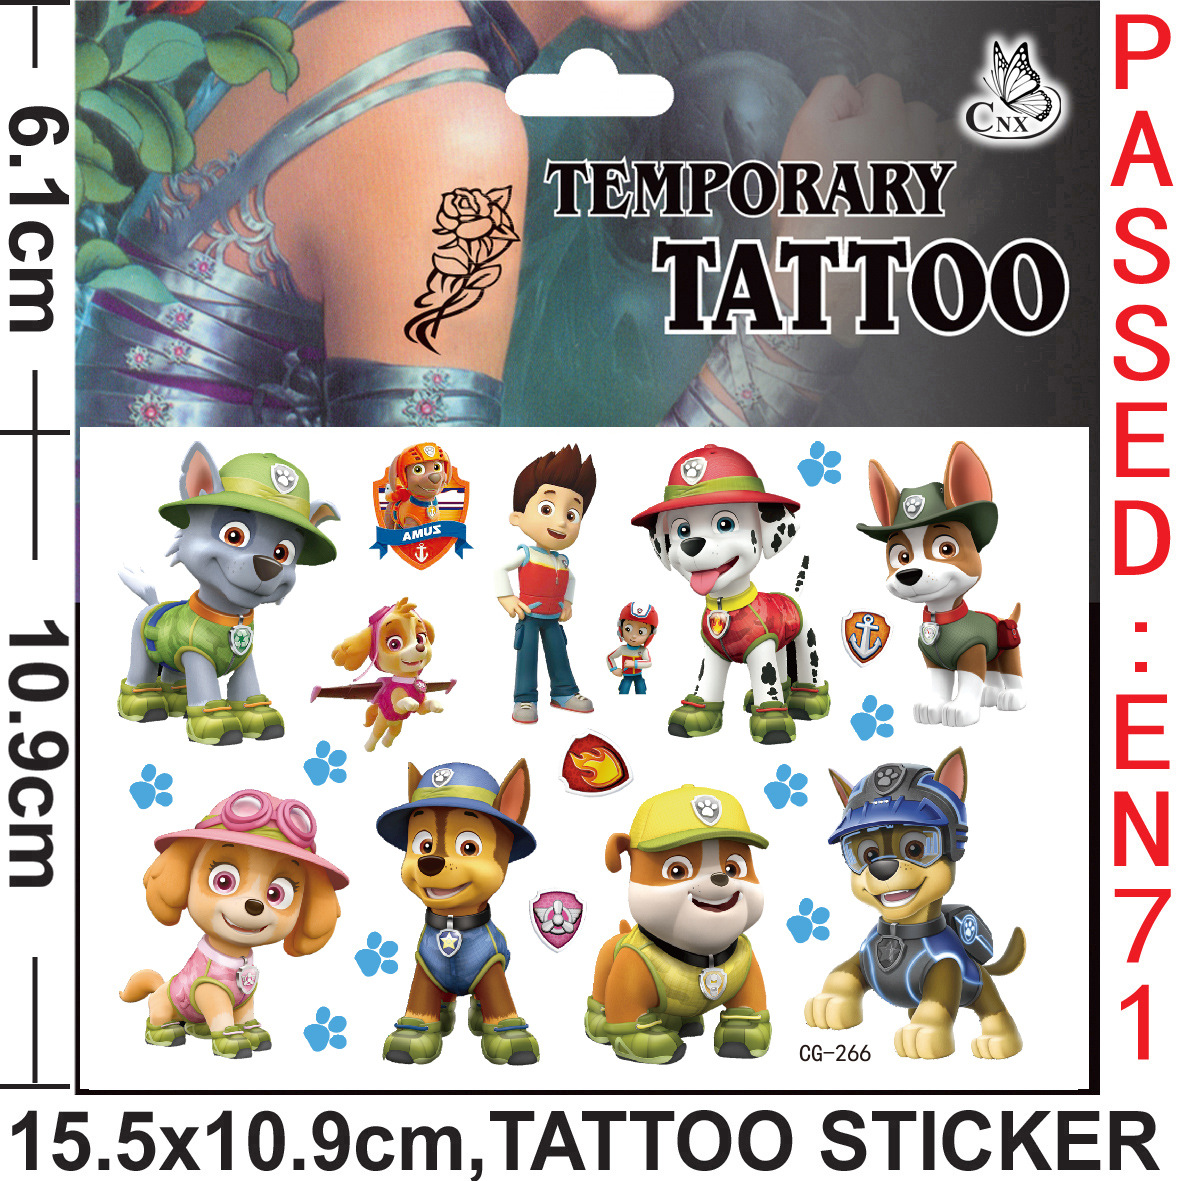 Customized Sticker Tattoo | PAW Patrol Tattoo Sticker Supply